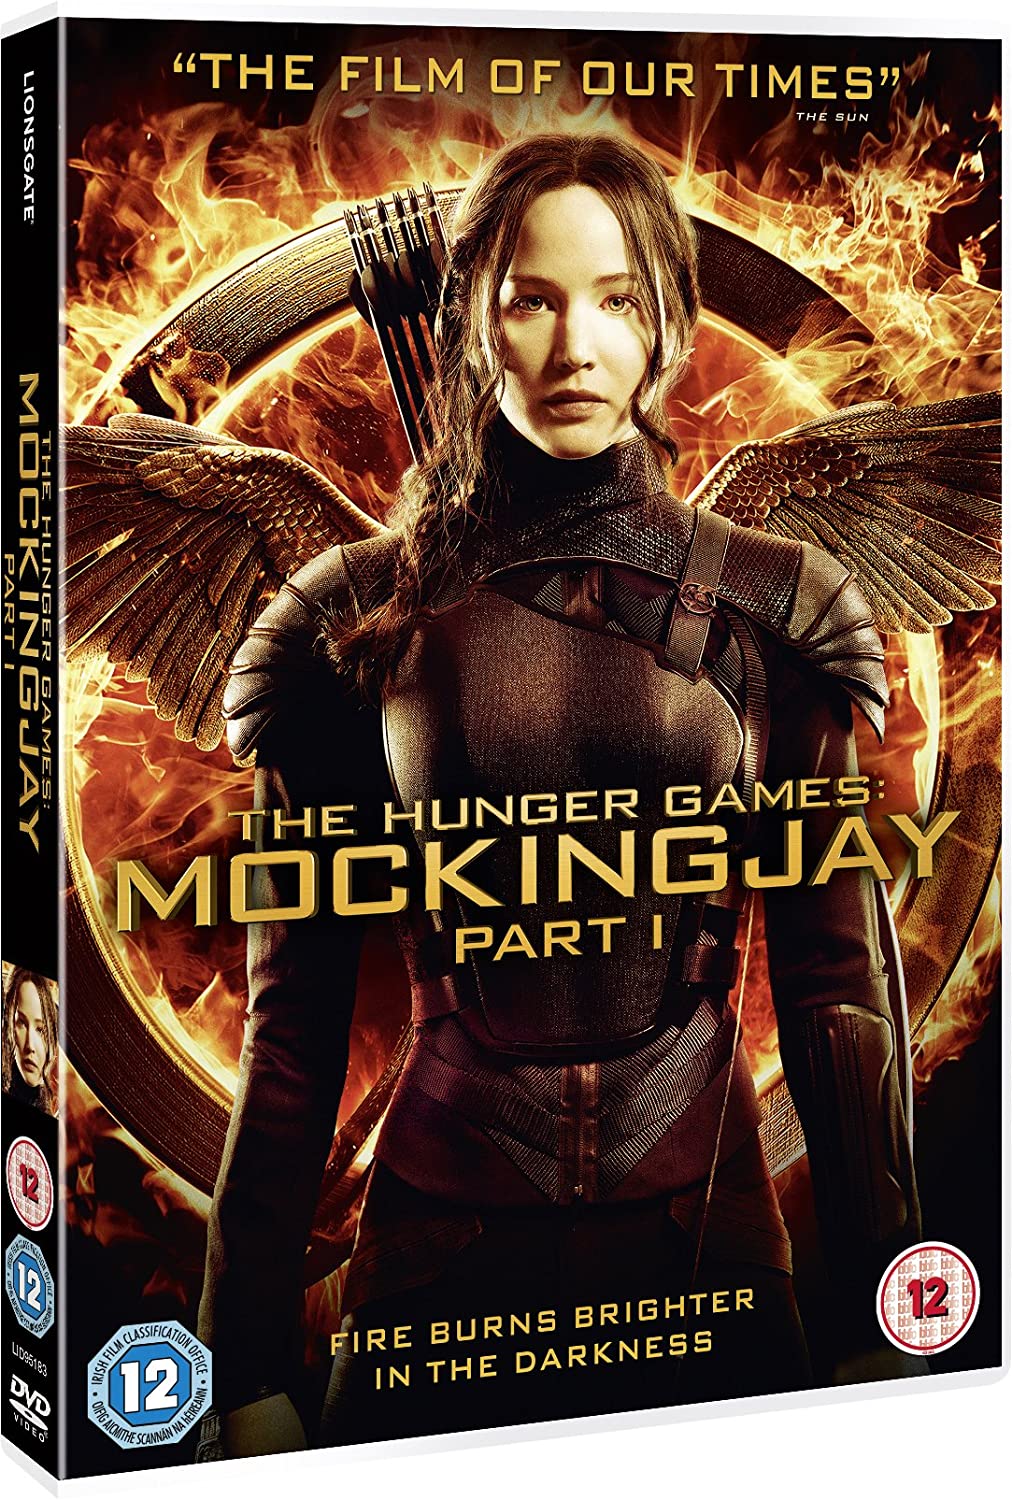 Les Hunger Games : Mockingjay Partie 1 [DVD] [2015]